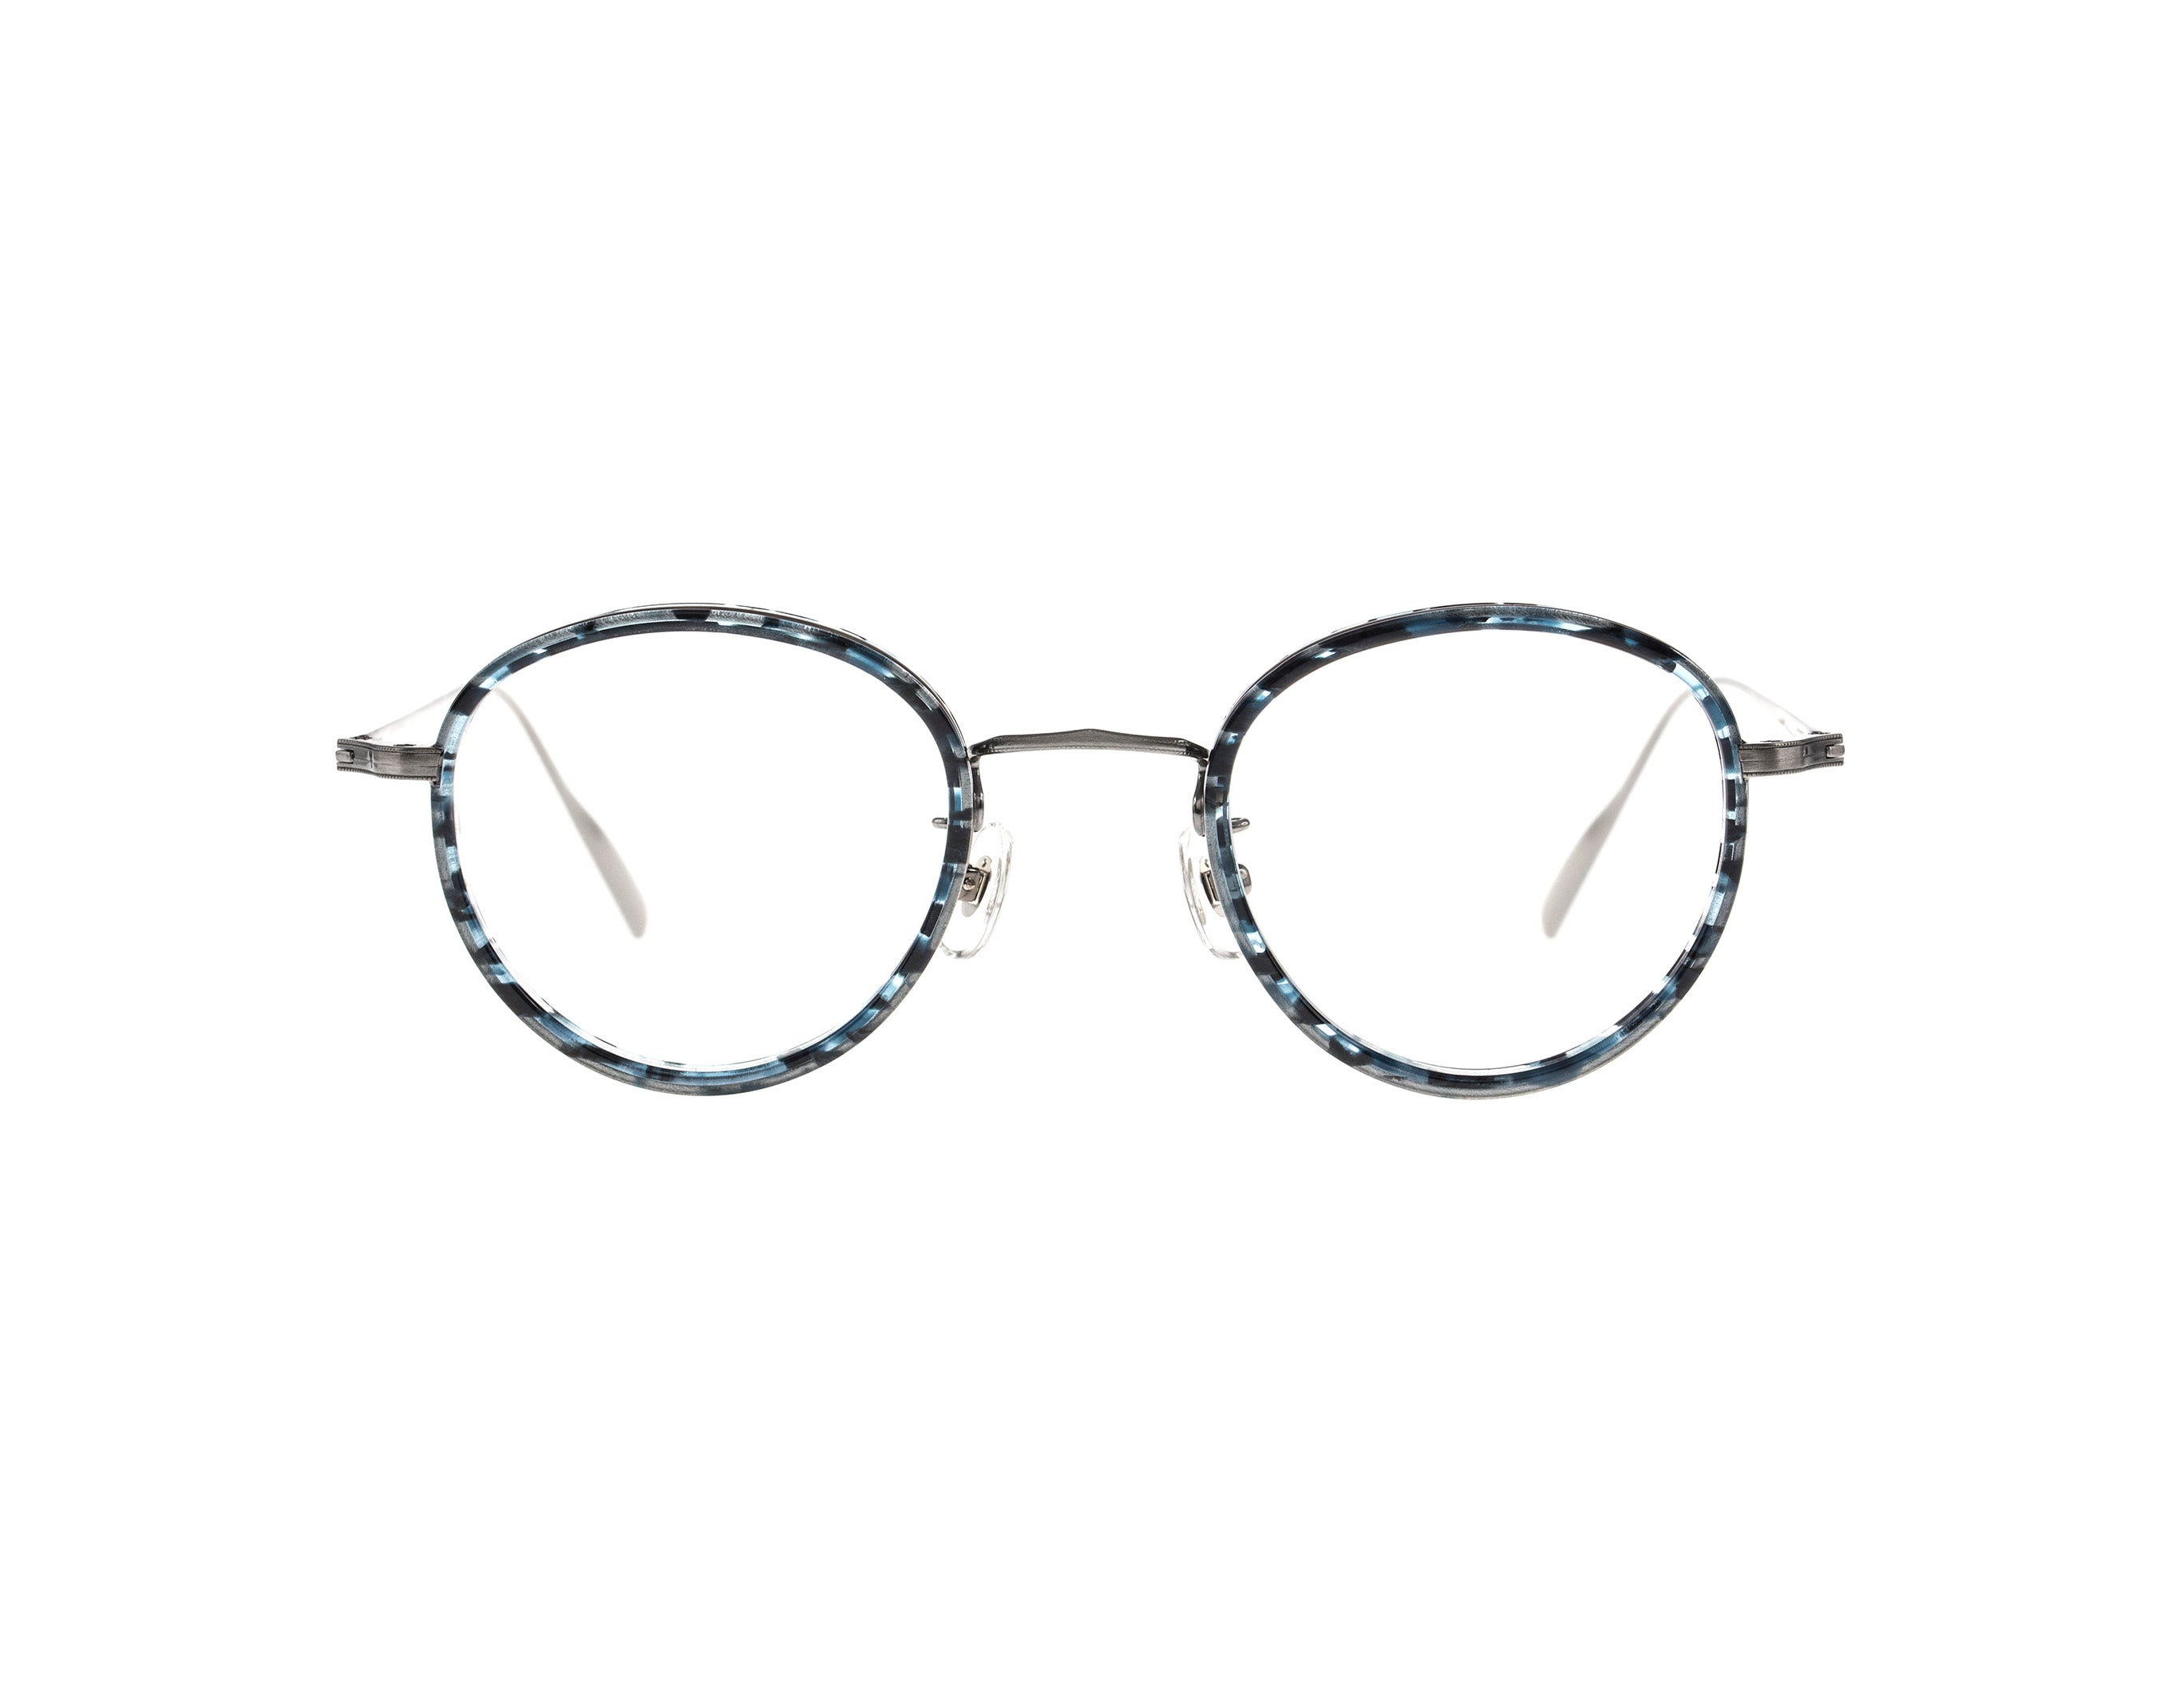 Oh My Glasses - Raymond omg-065-4